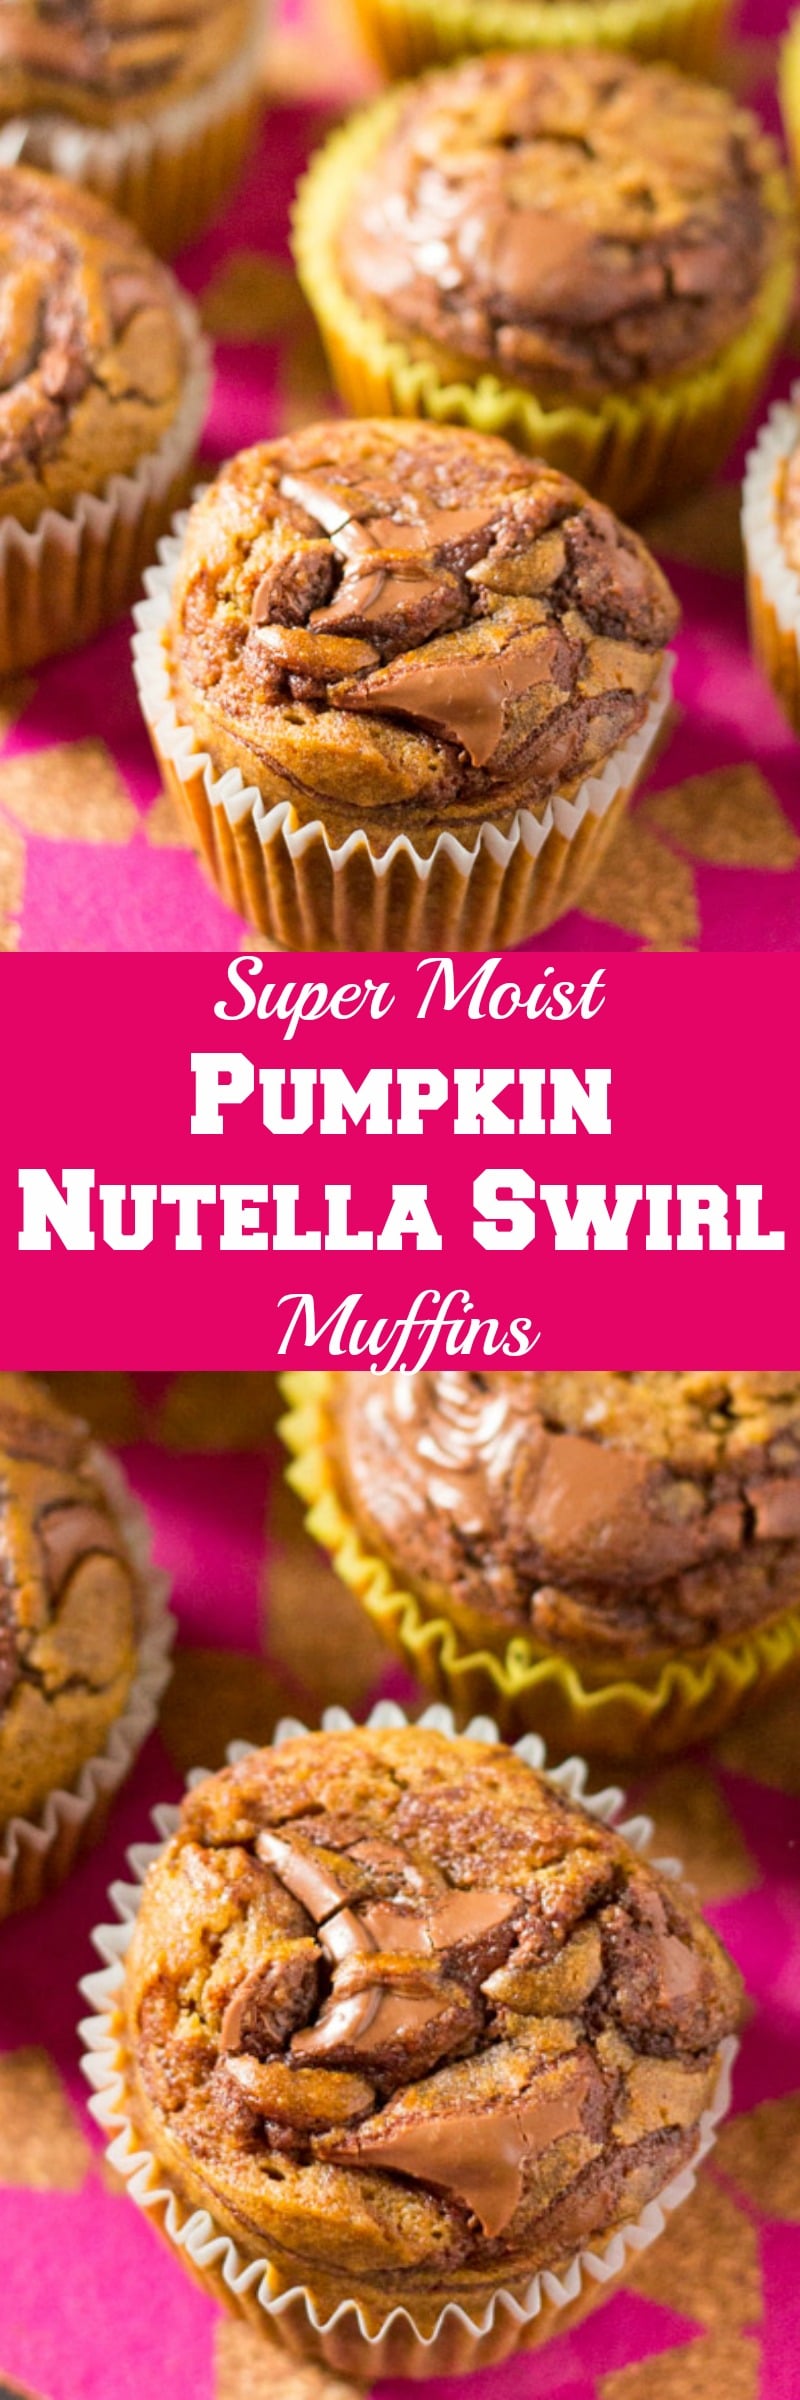 Super Moist Pumpkin Nutella Swirl Muffins